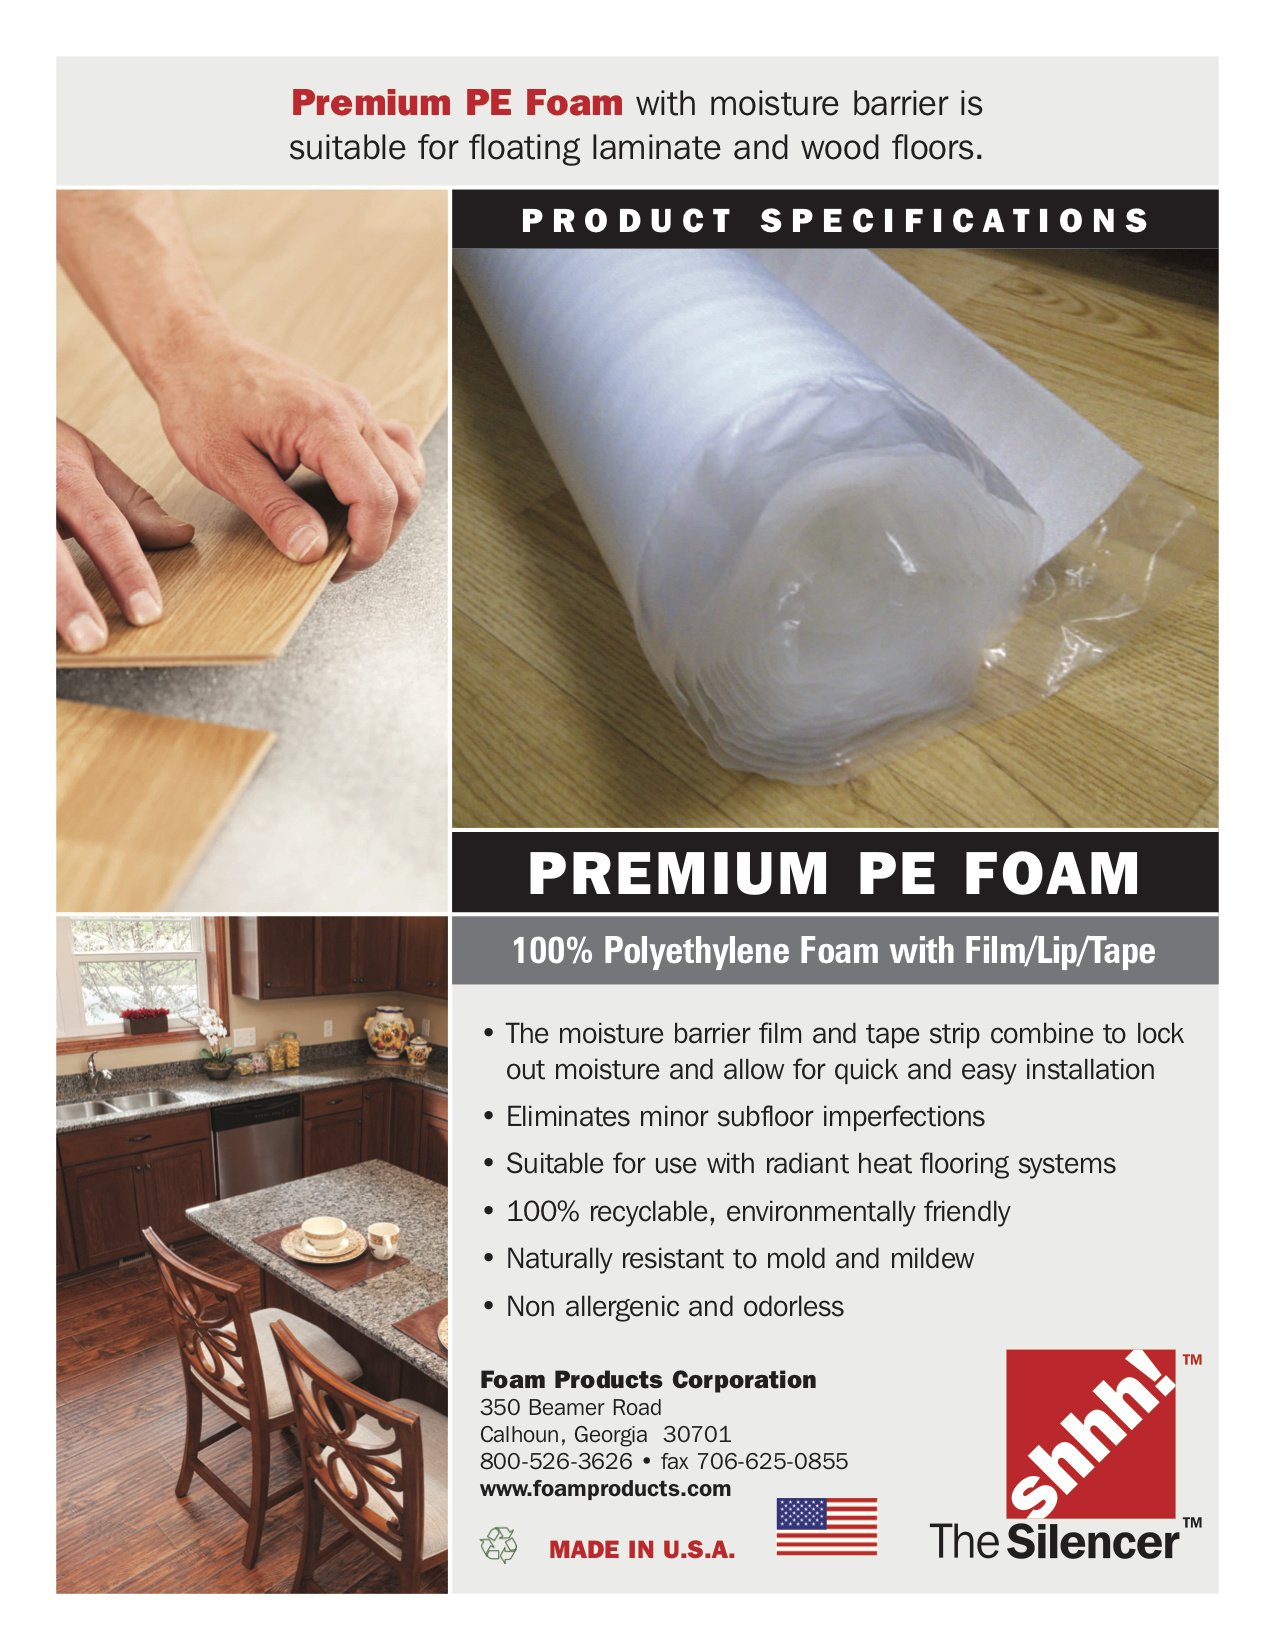 Foam Products Corporation - Premium PE Foam